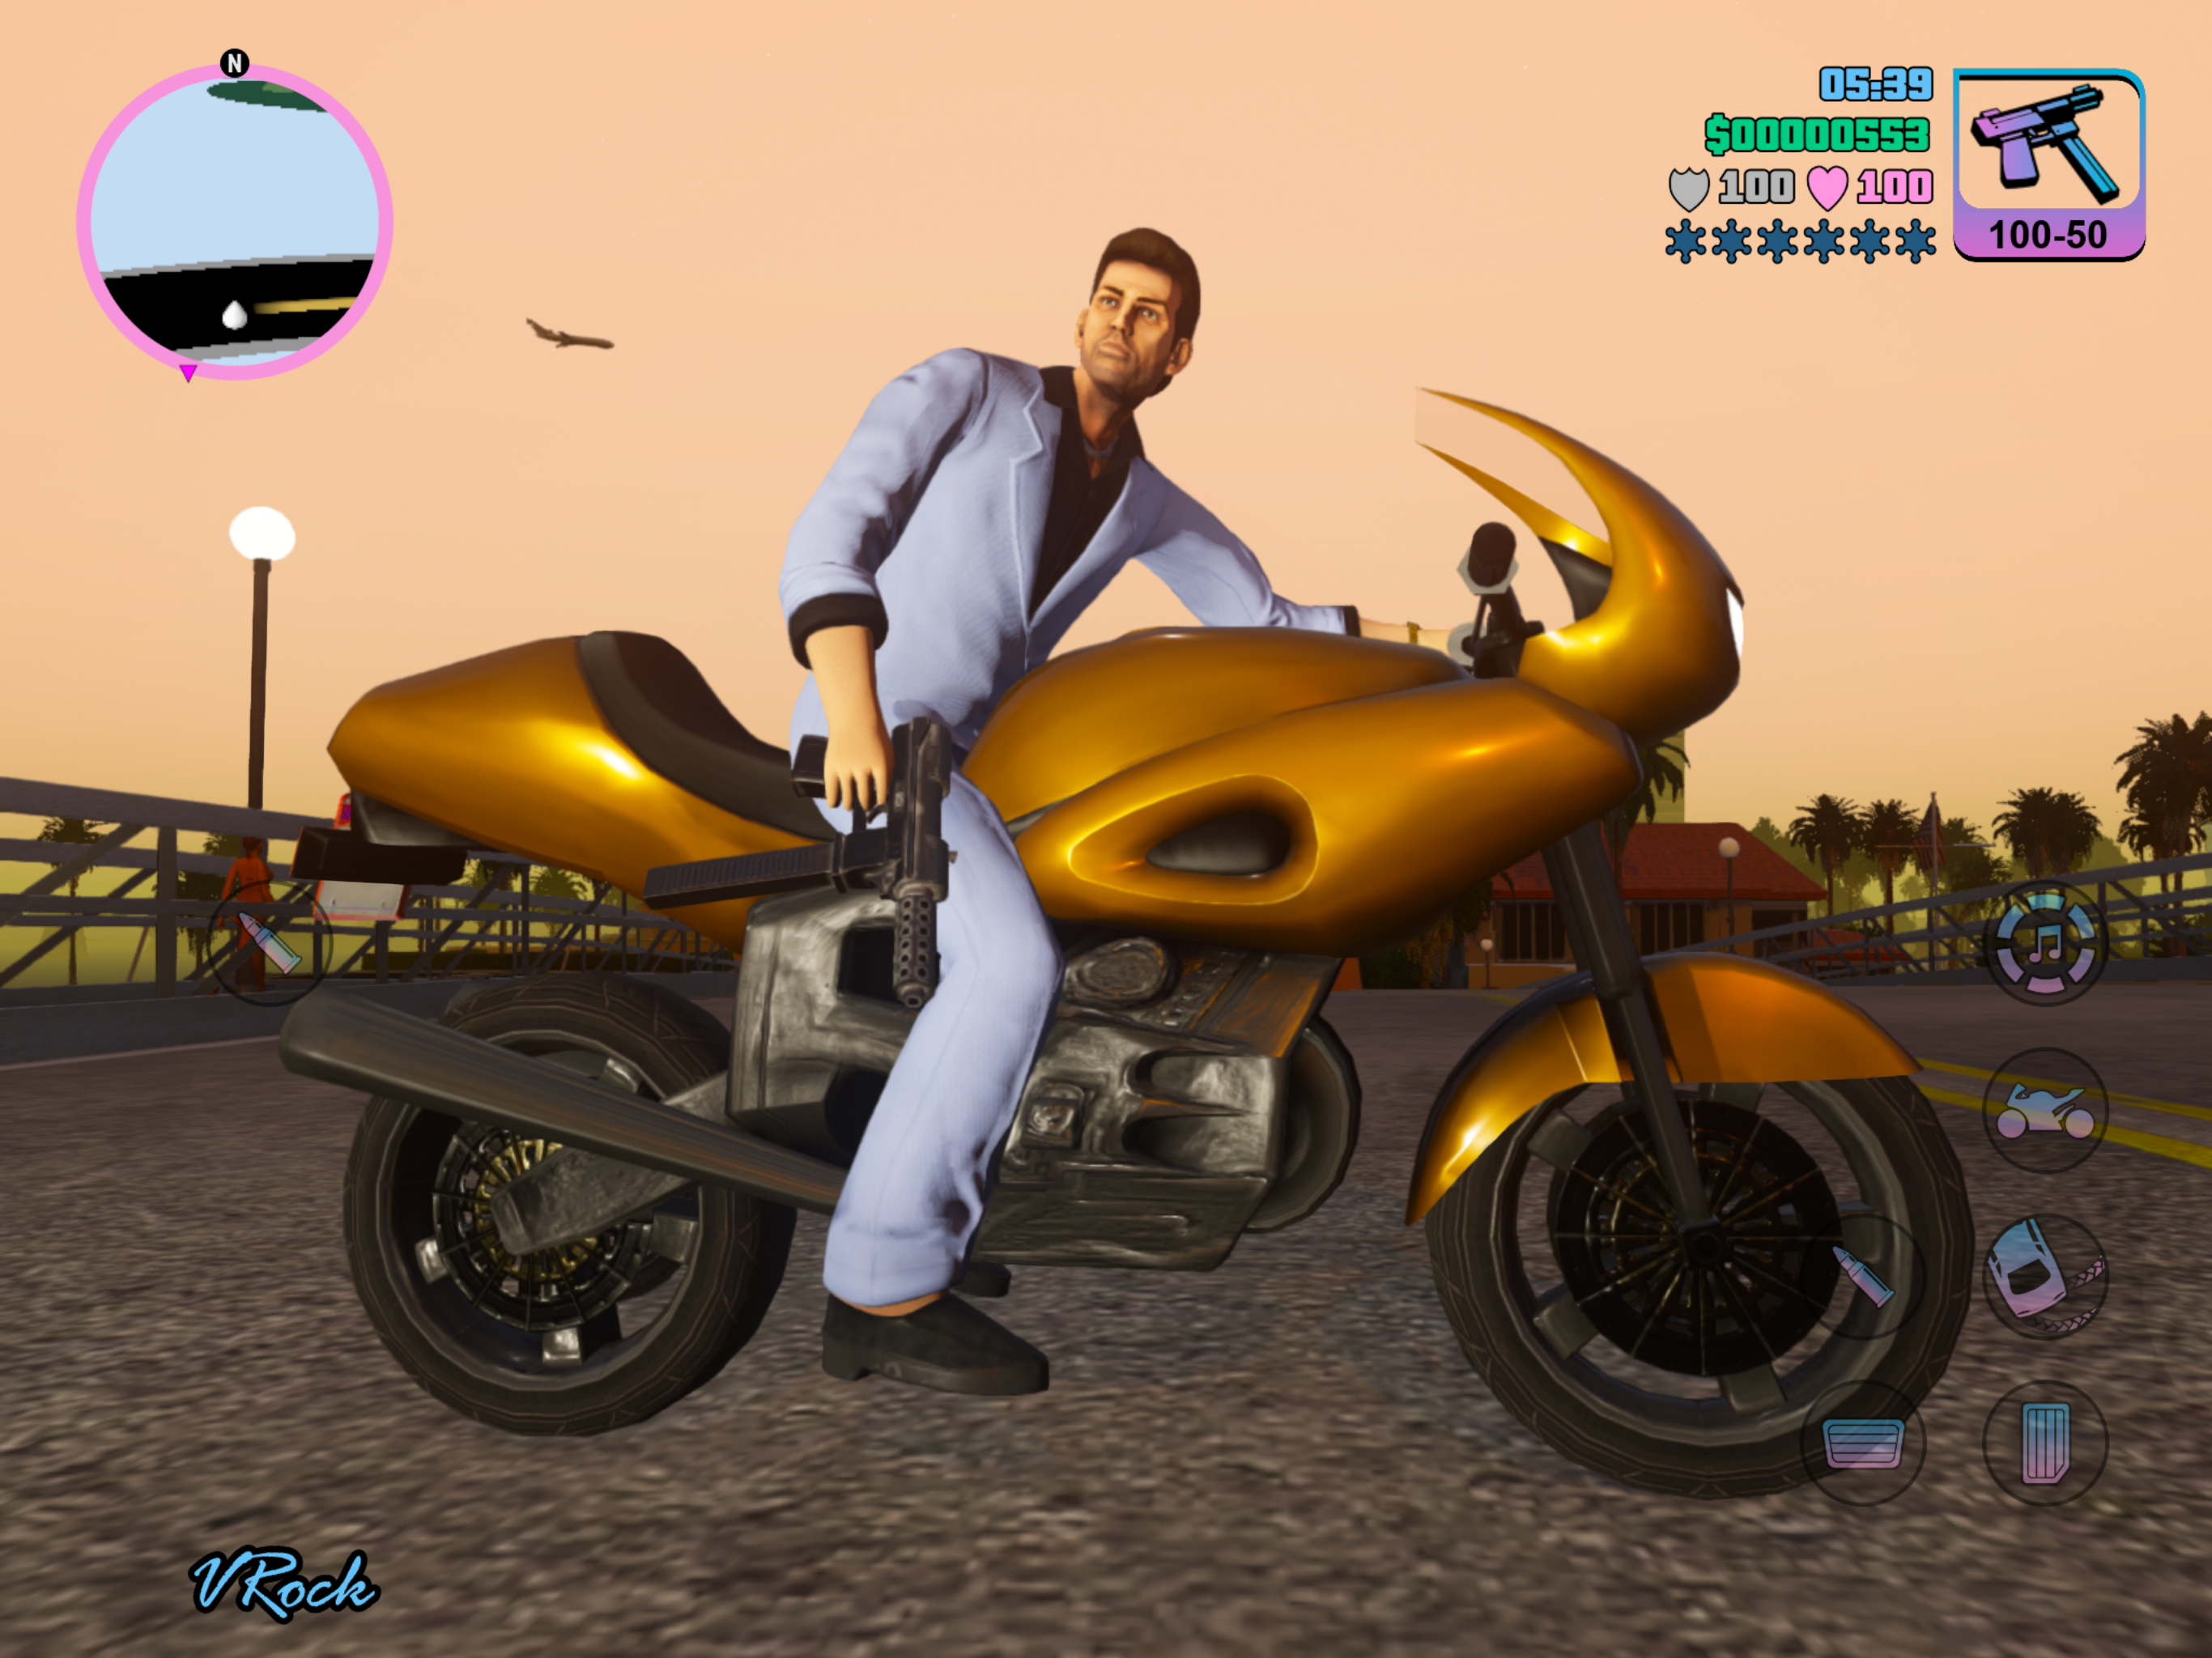 GTA: Vice City - Definitive screenshot game